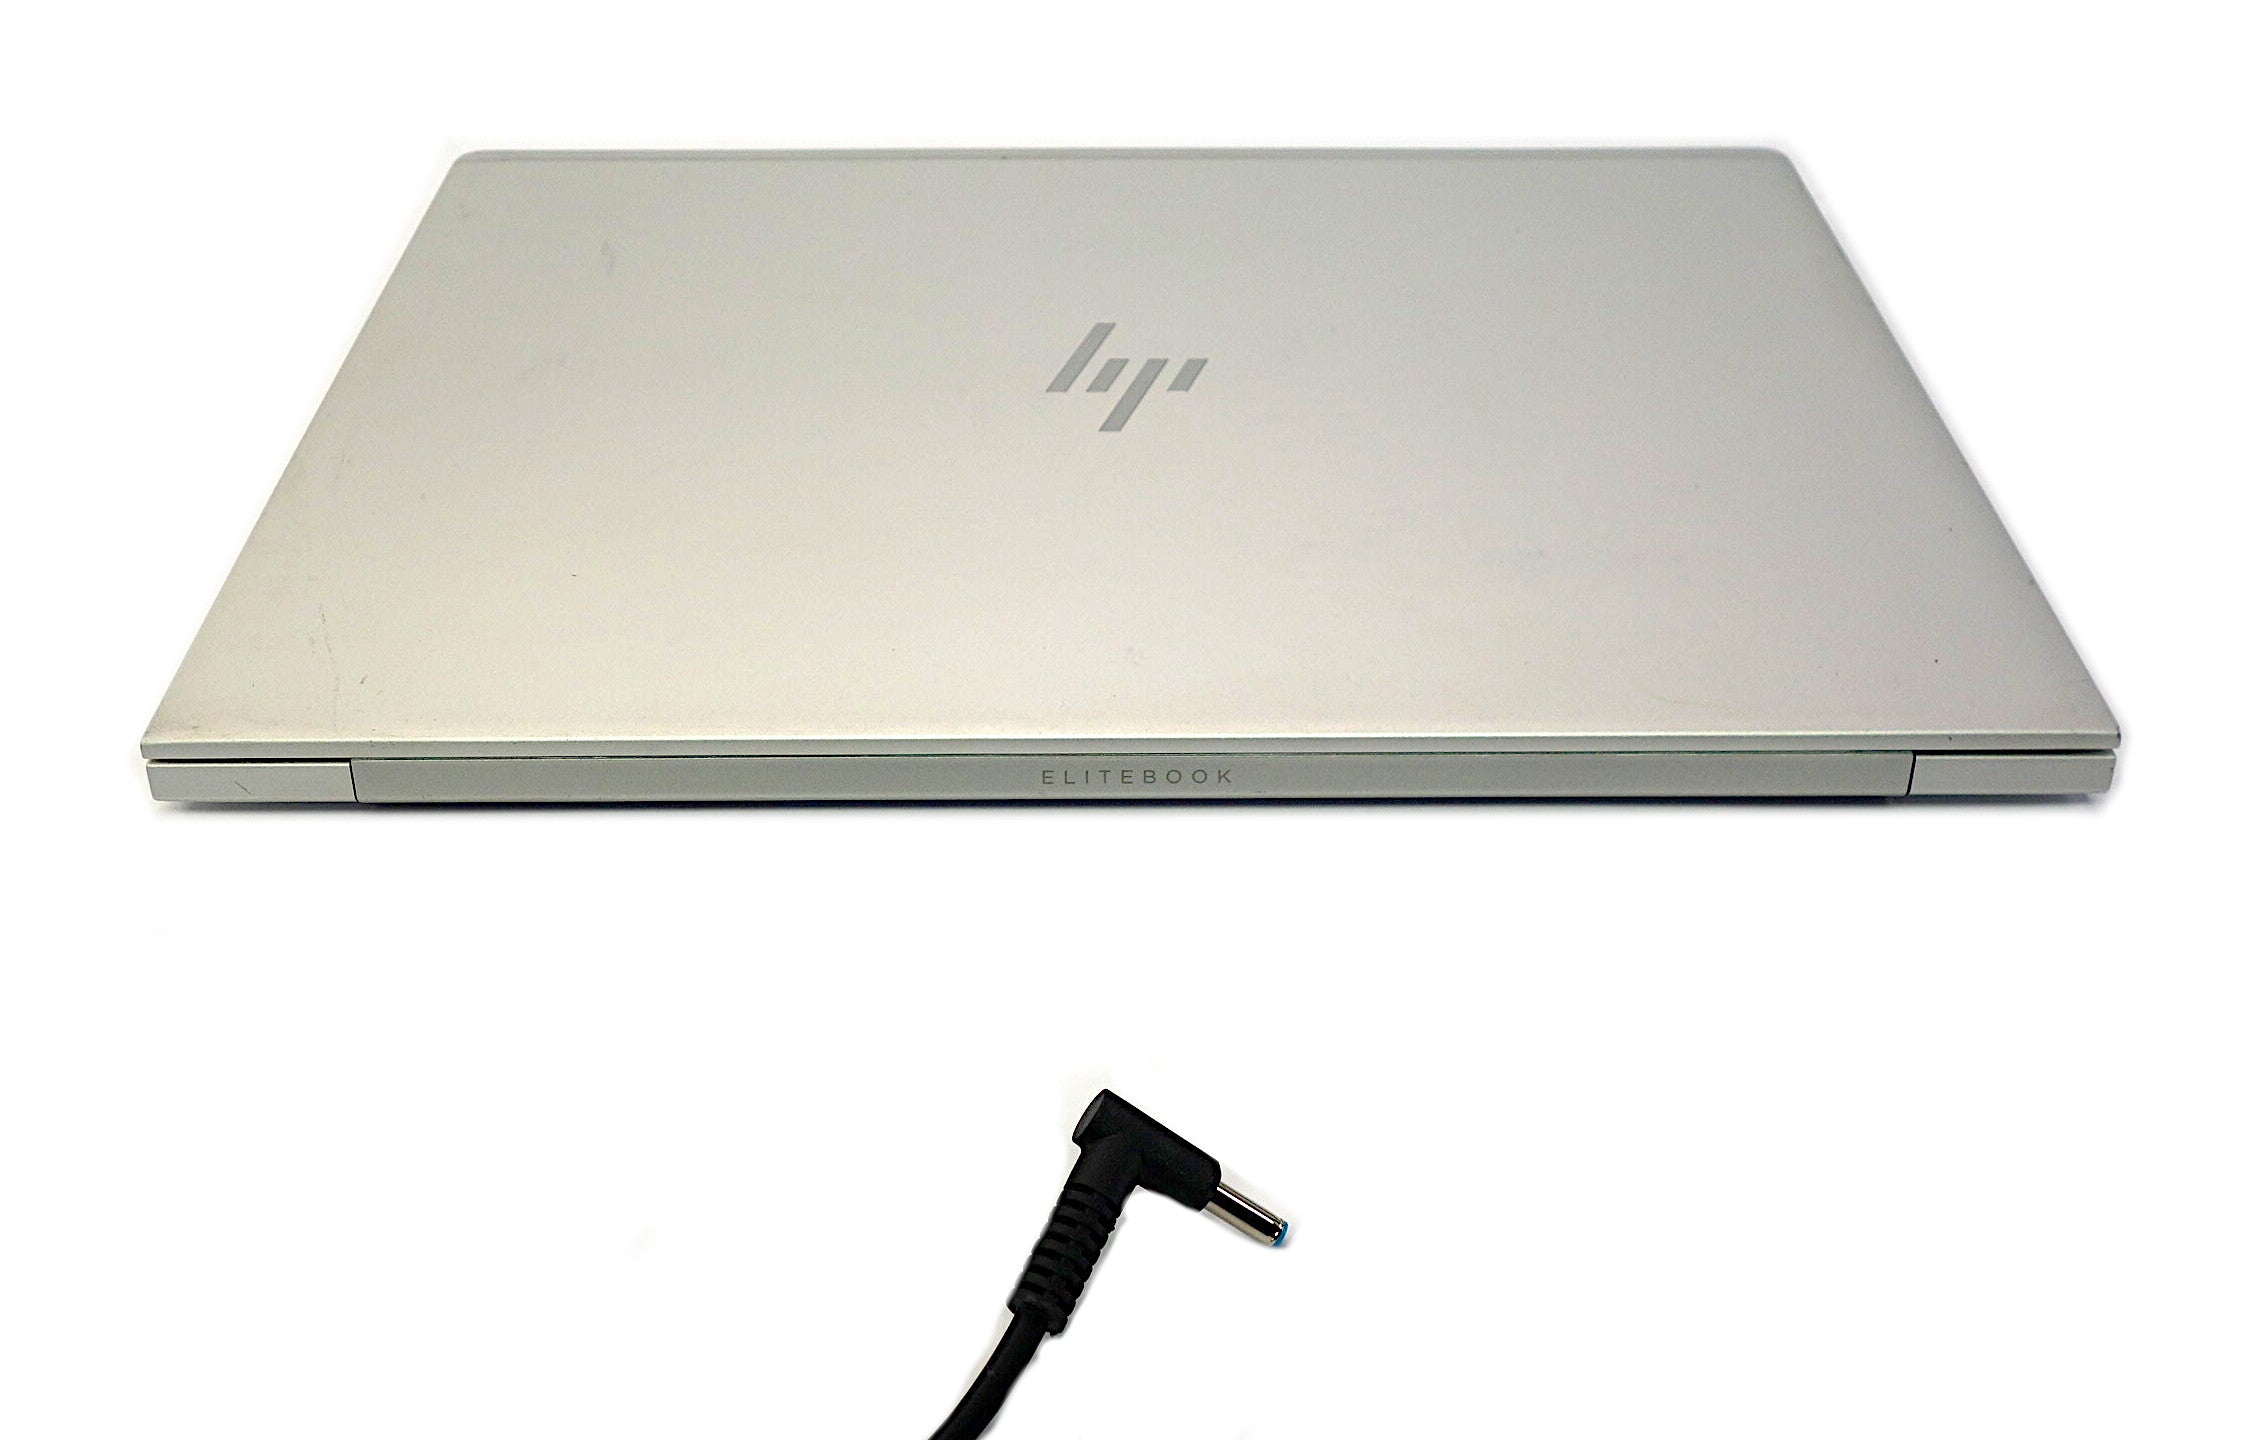 HP EliteBook 1040 G4 Laptop, 13.9" i5 7th Gen, 16GB RAM, 512GB SSD